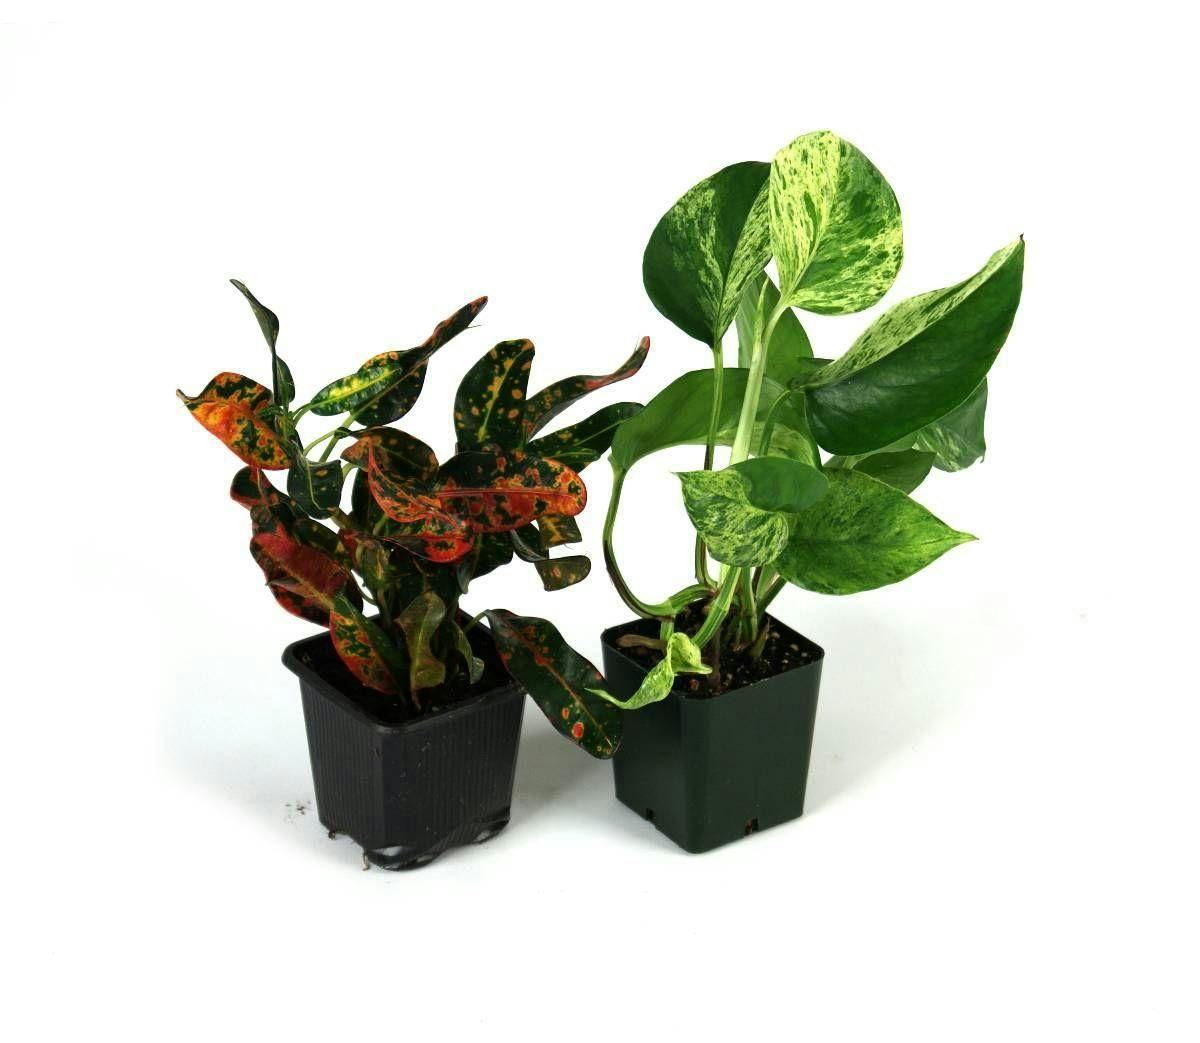 Image 1 for Crested Gecko Vivarium Plant Kit (2 Plants) by Josh's Frogs